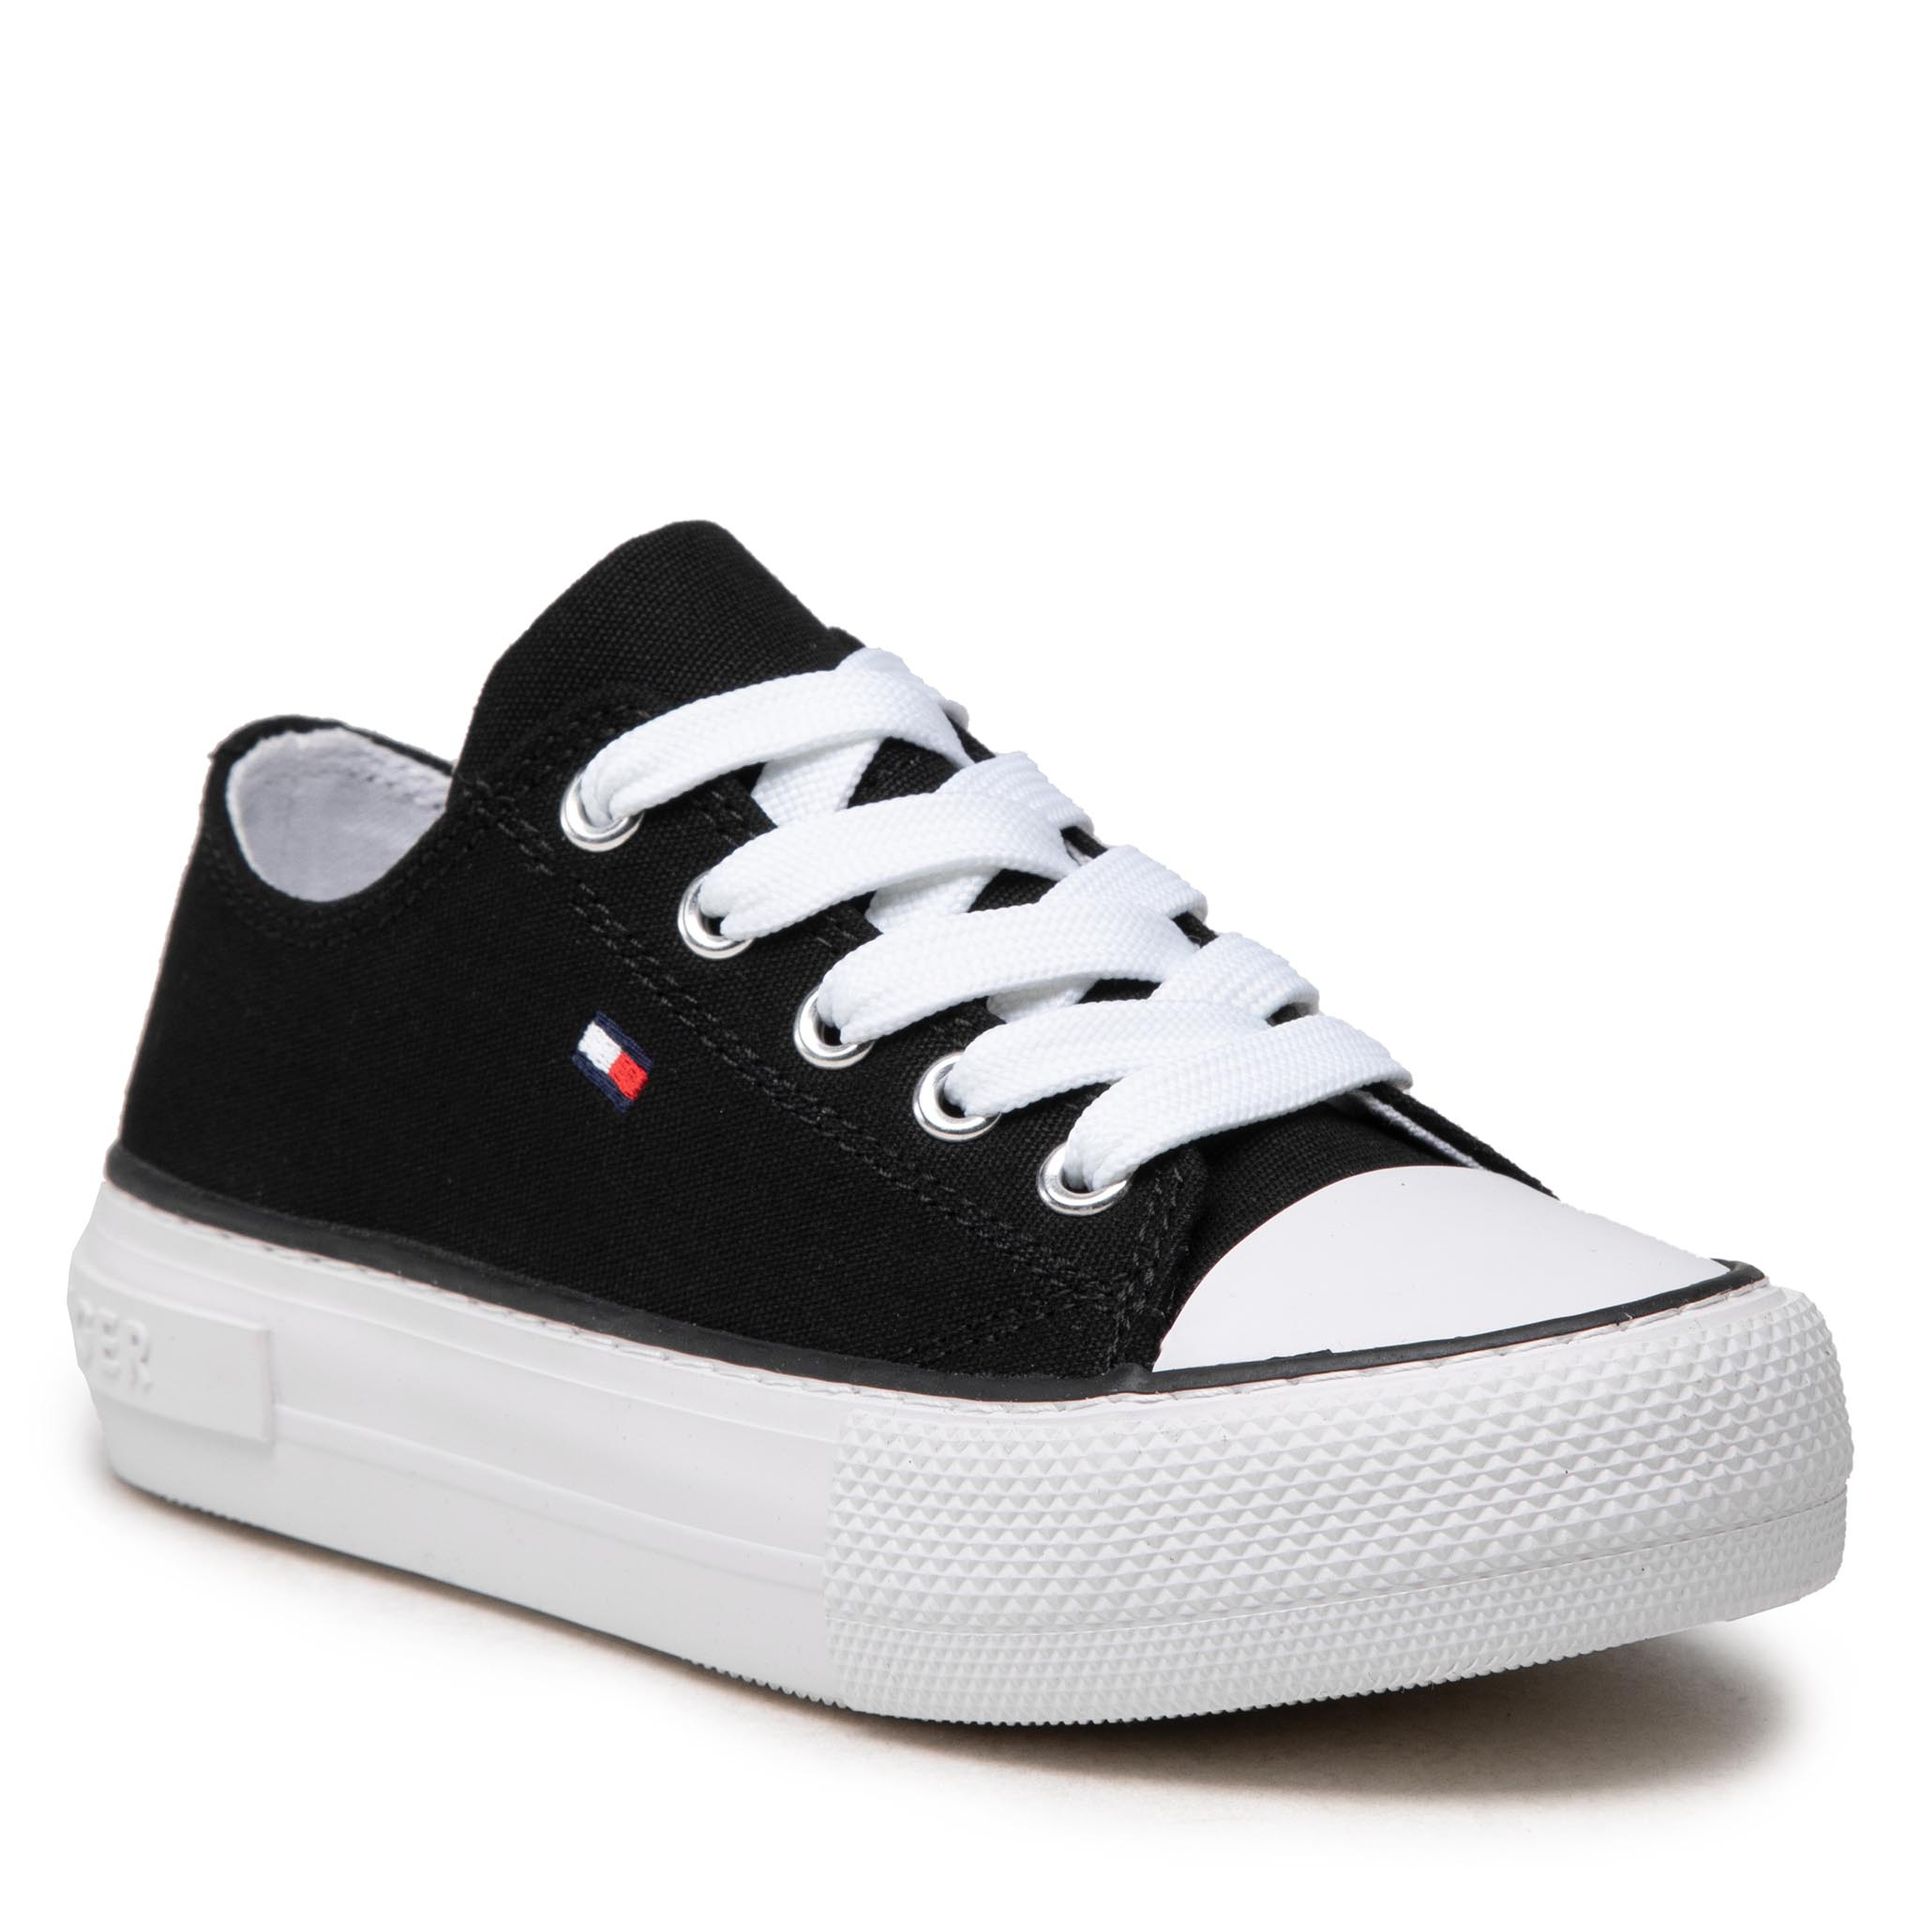 Tommy Hilfiger Trampki Low Cut Lace-Up Sneaker T3A4-32118-0890 M Black 999 Trampki Low Cut Lace-Up Sneaker T3A4-32118-0890 M Black 999